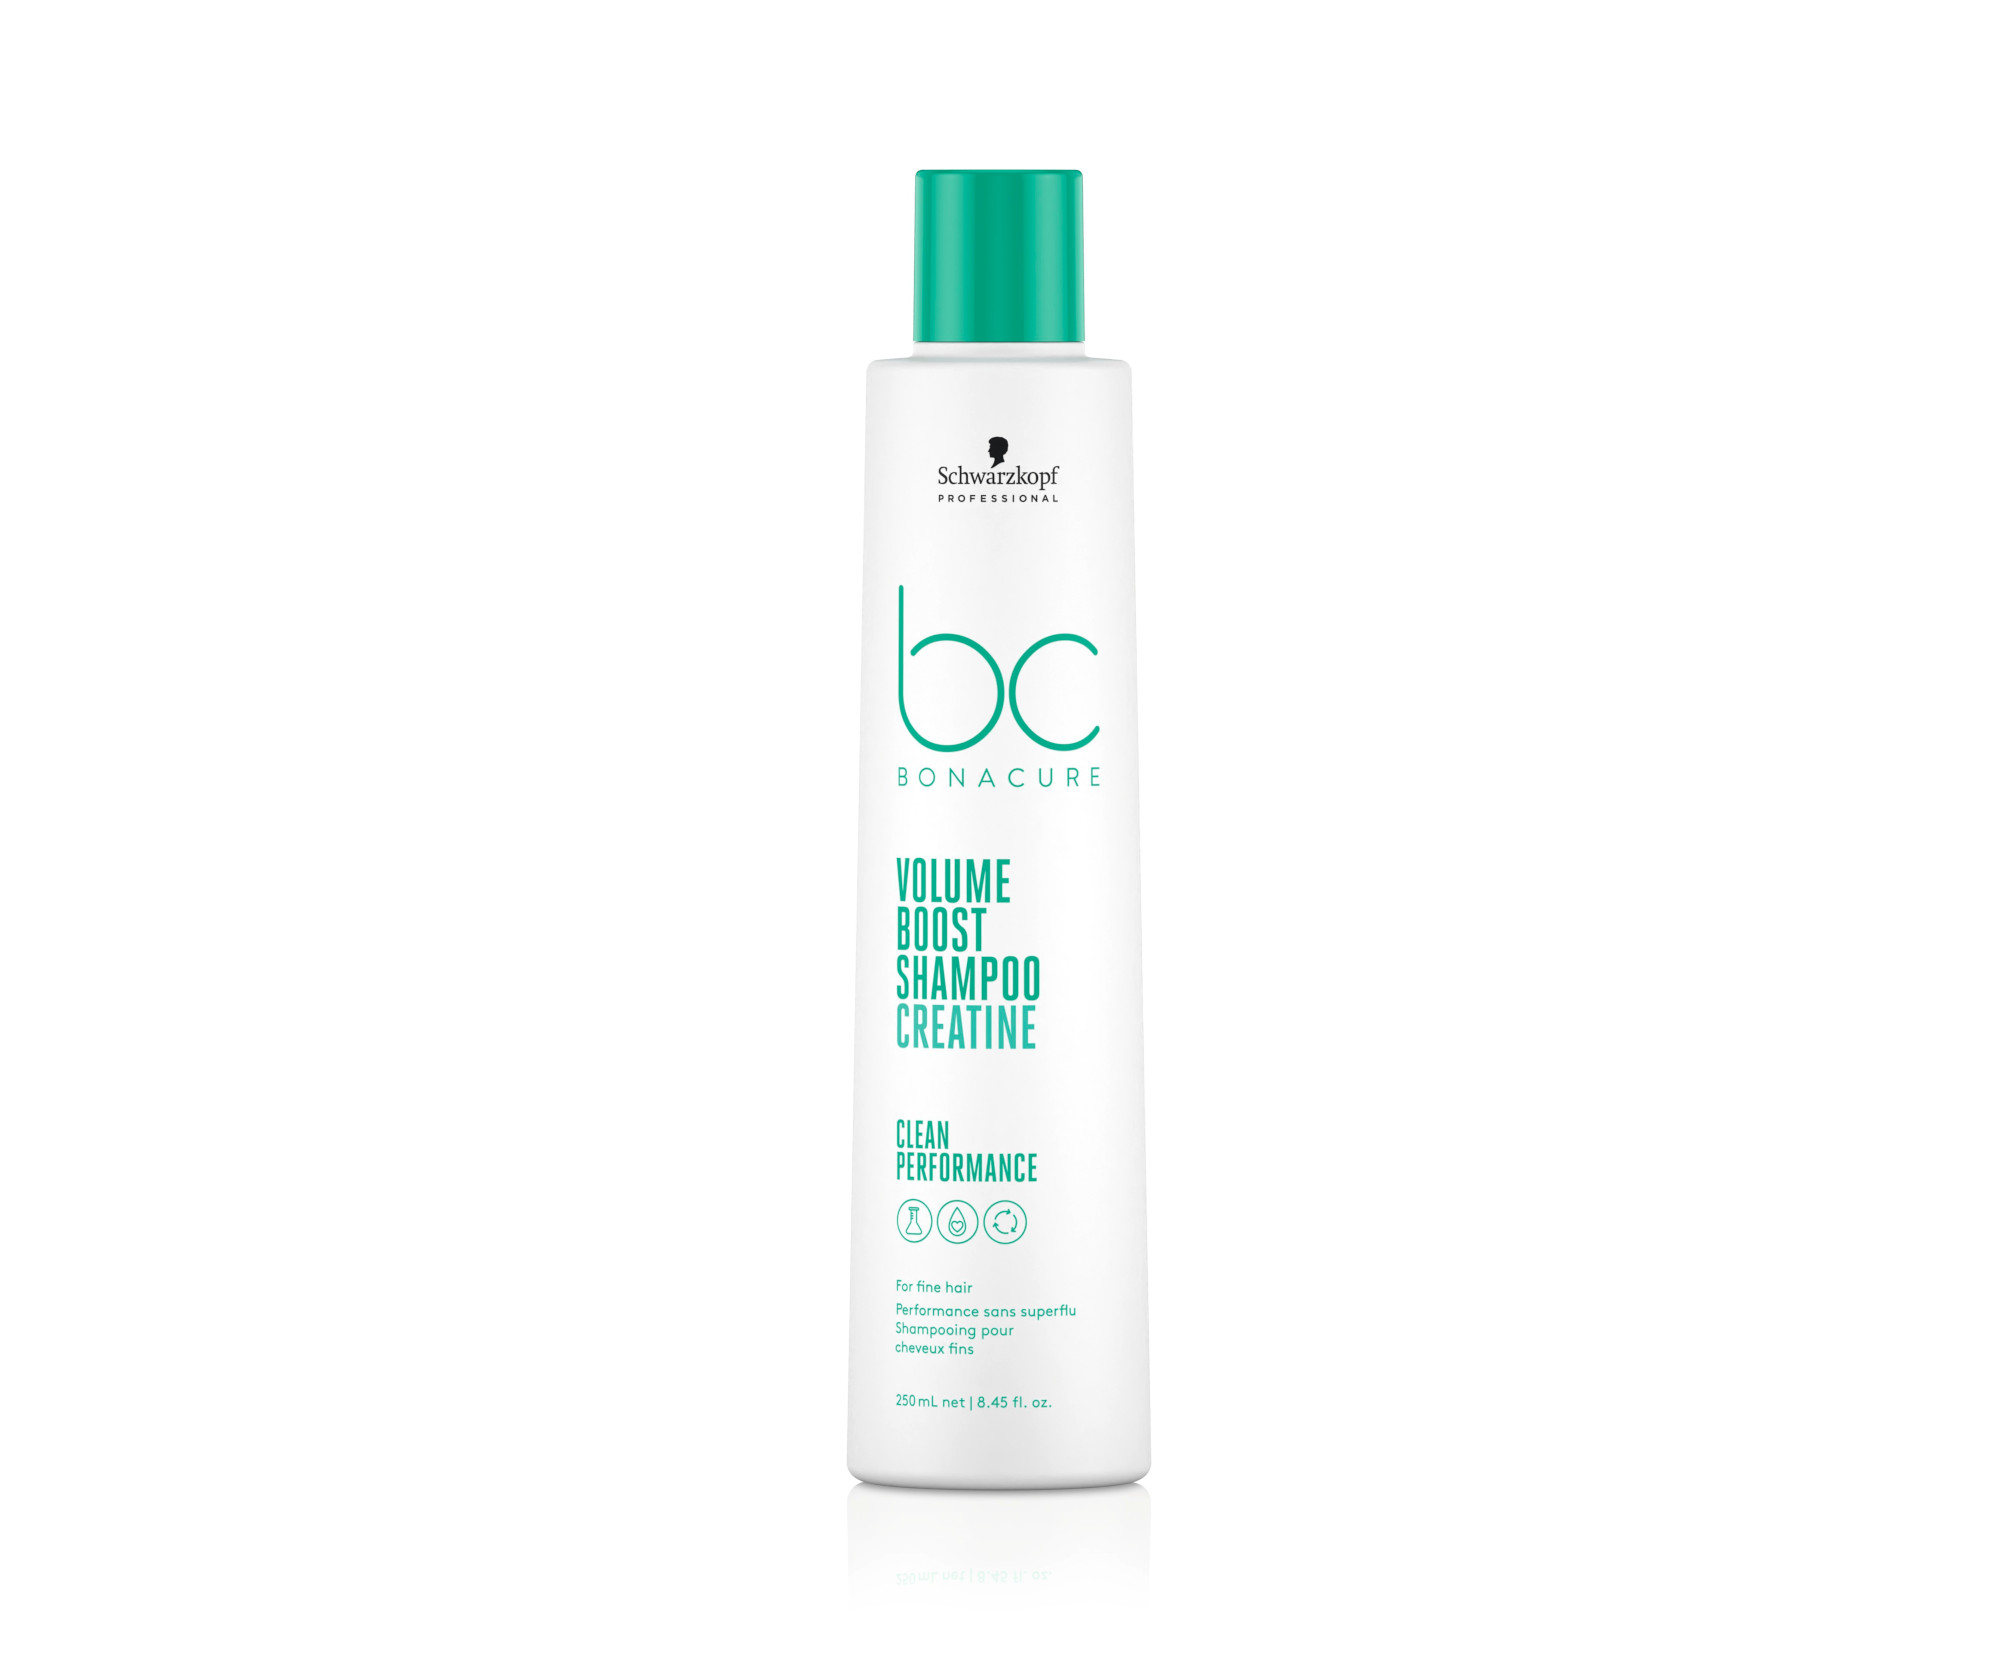 Objemový šampon pro jemné vlasy Schwarzkopf Professional BC Bonacure Volume Boost Shampoo - 250 ml (2709535) + dárek zdarma